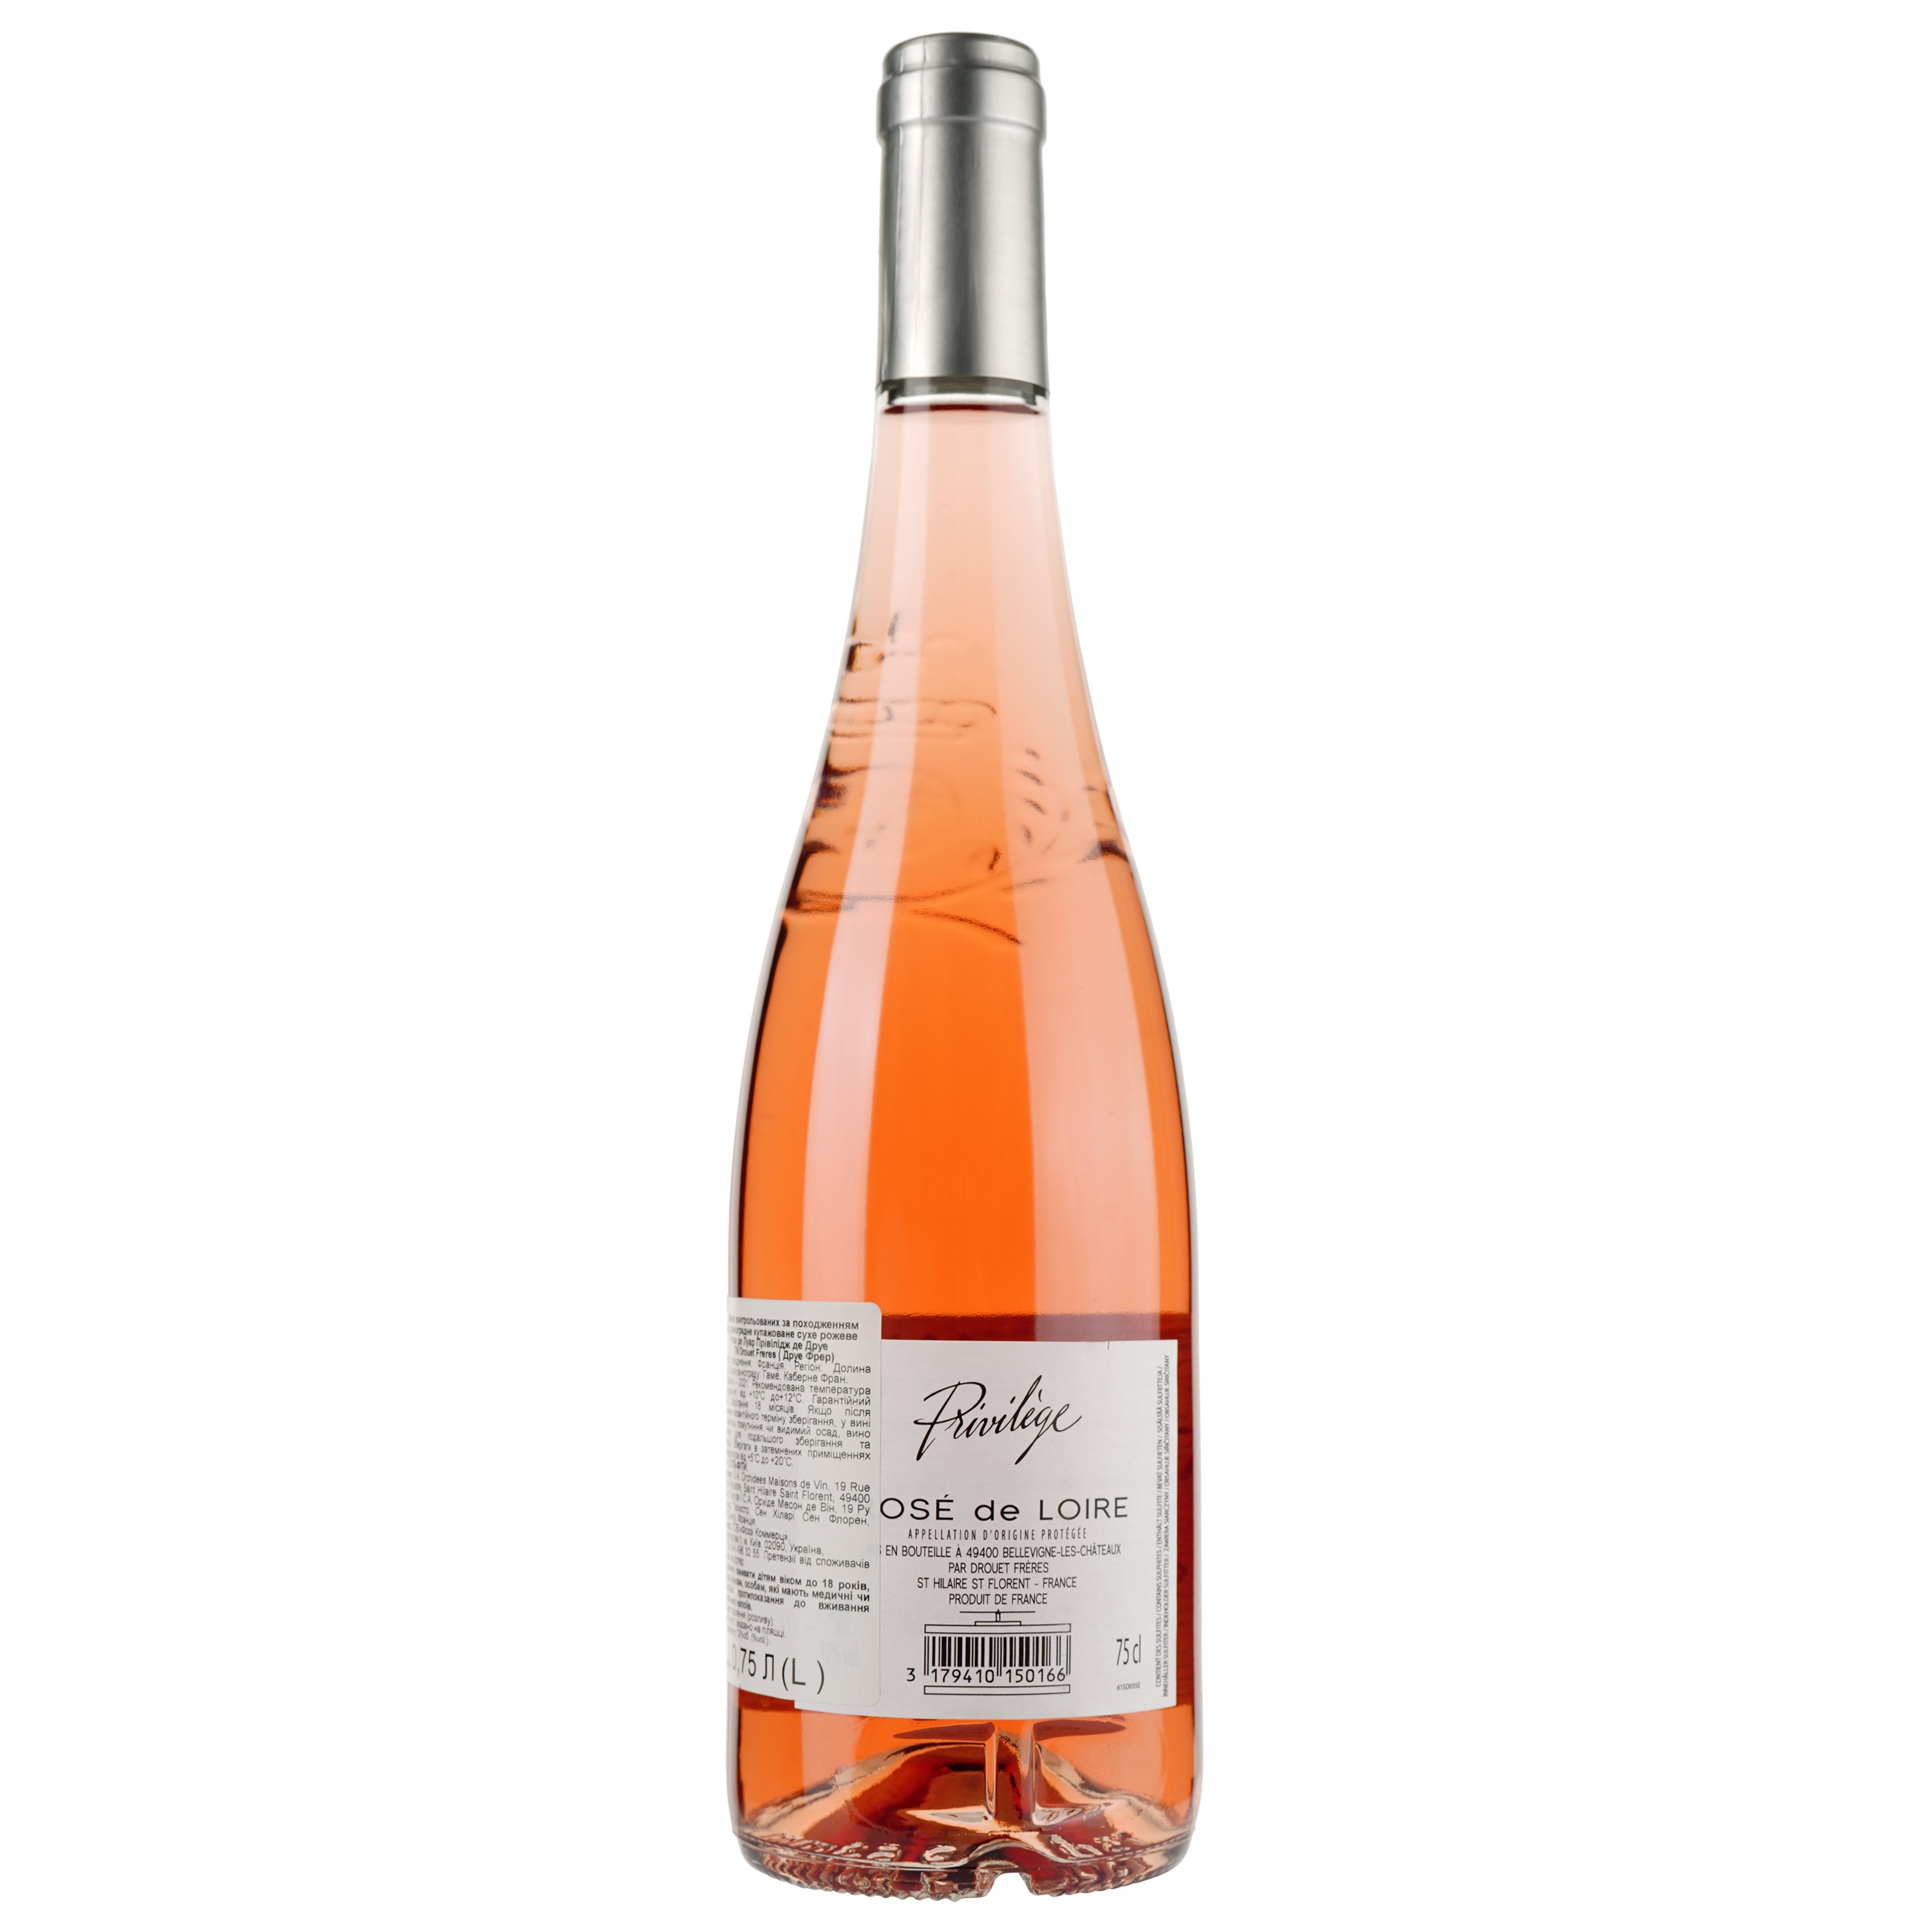 Вино Drouet Freres Rose de Loire, розовое, сухое, 0,75 л - фото 2